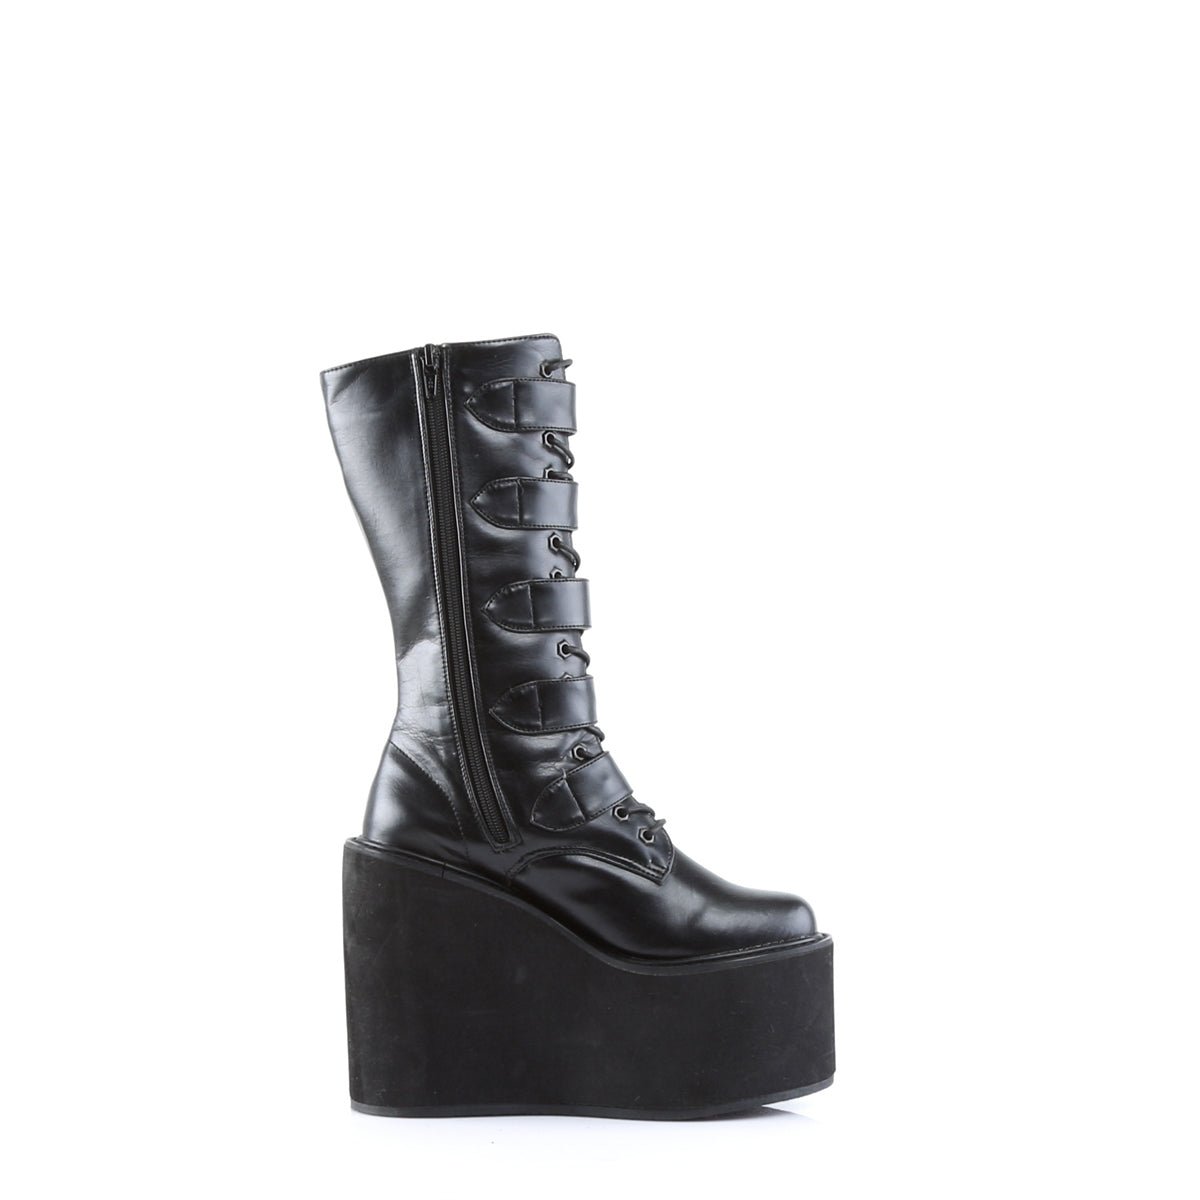 Too Fast | Demonia Swing 220 | Black Vegan Leather Women's Mid Calf Boots